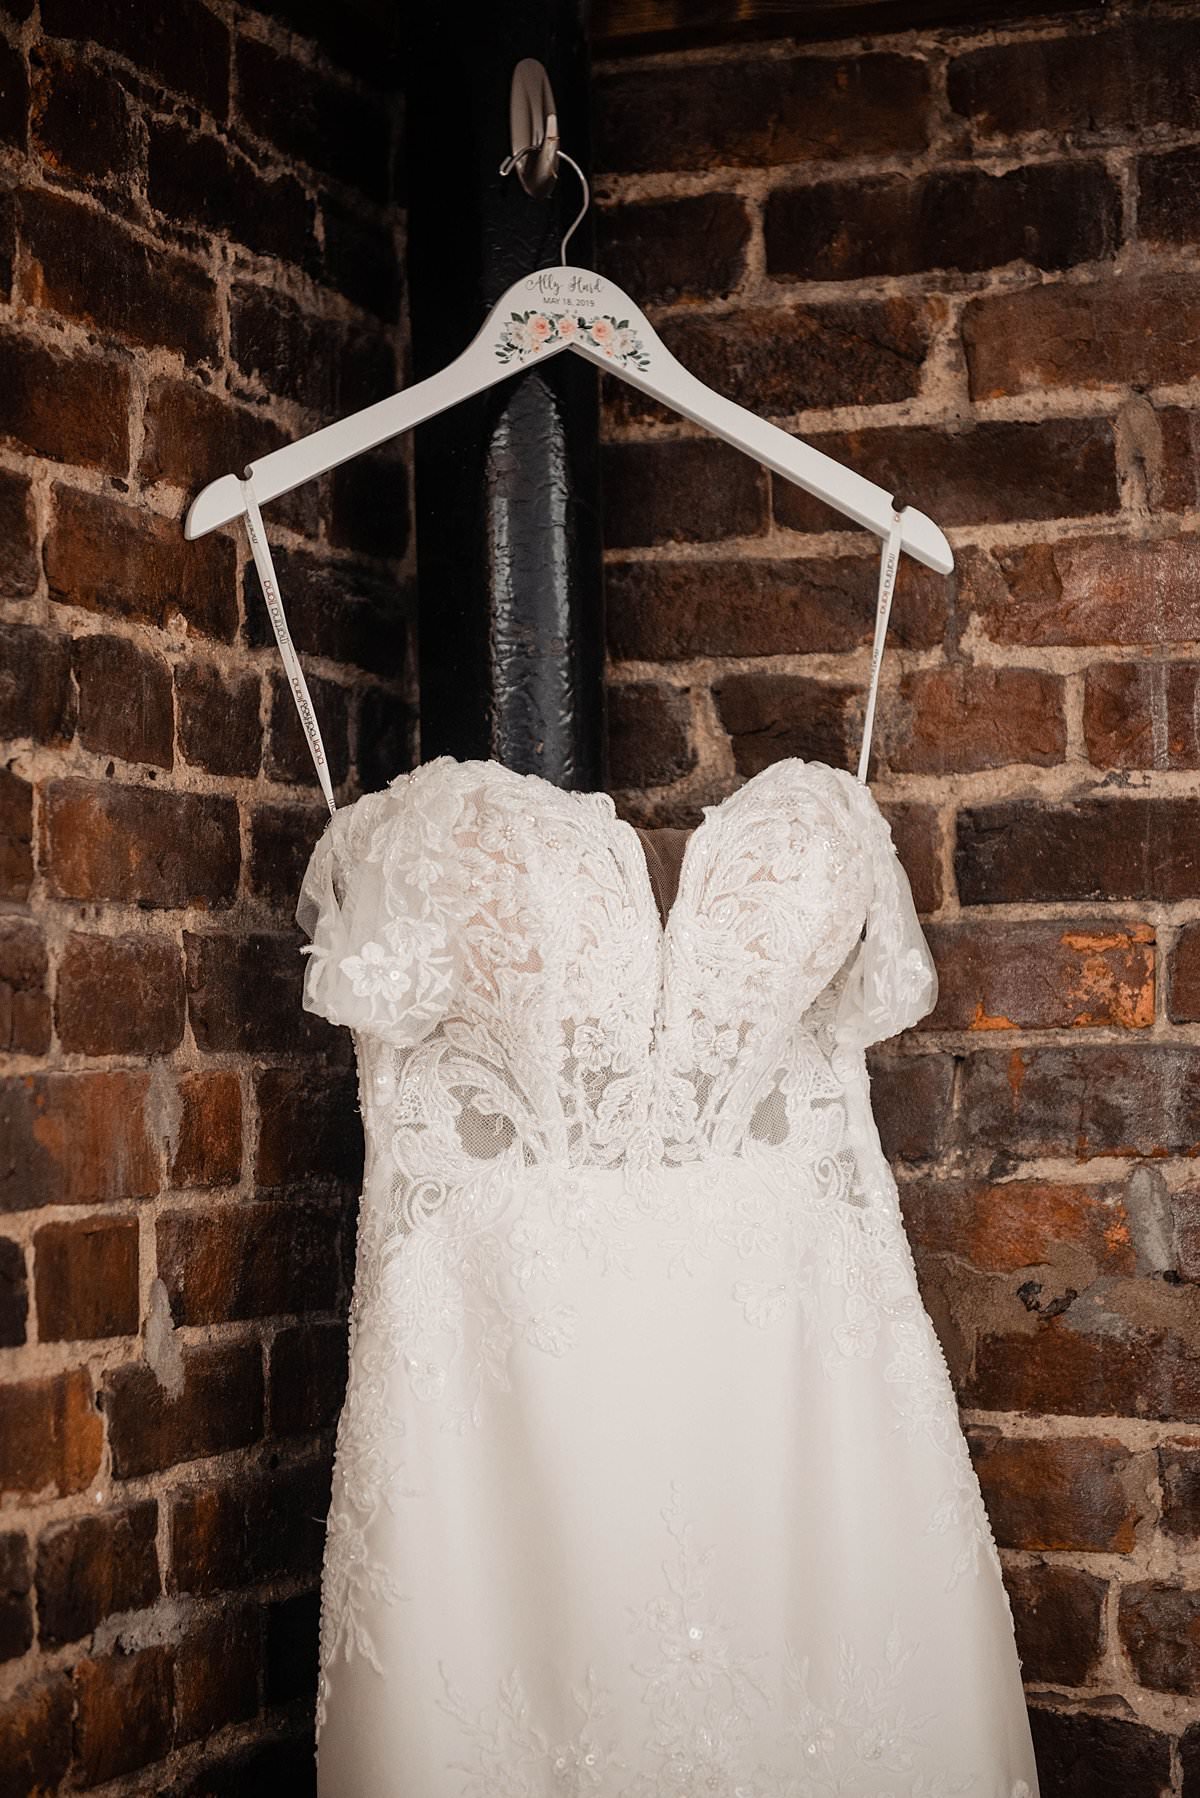 Brides wedding dress hanging from custom hanger